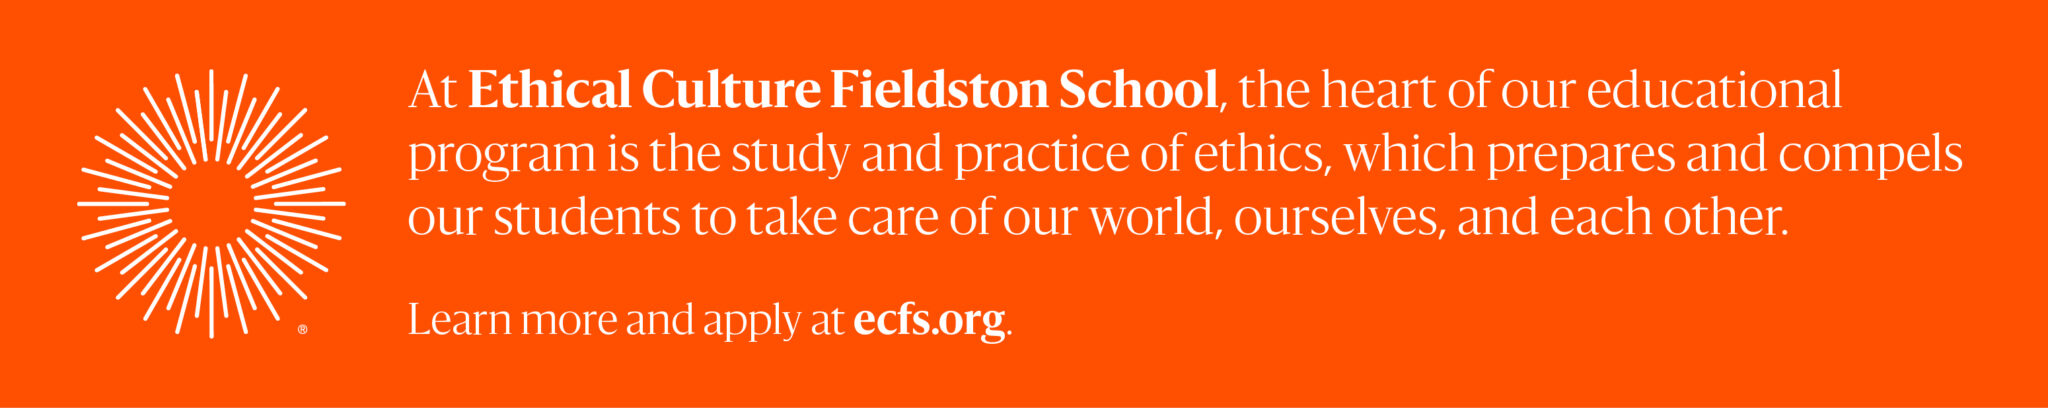 Ethical Culture Fieldston School GPM